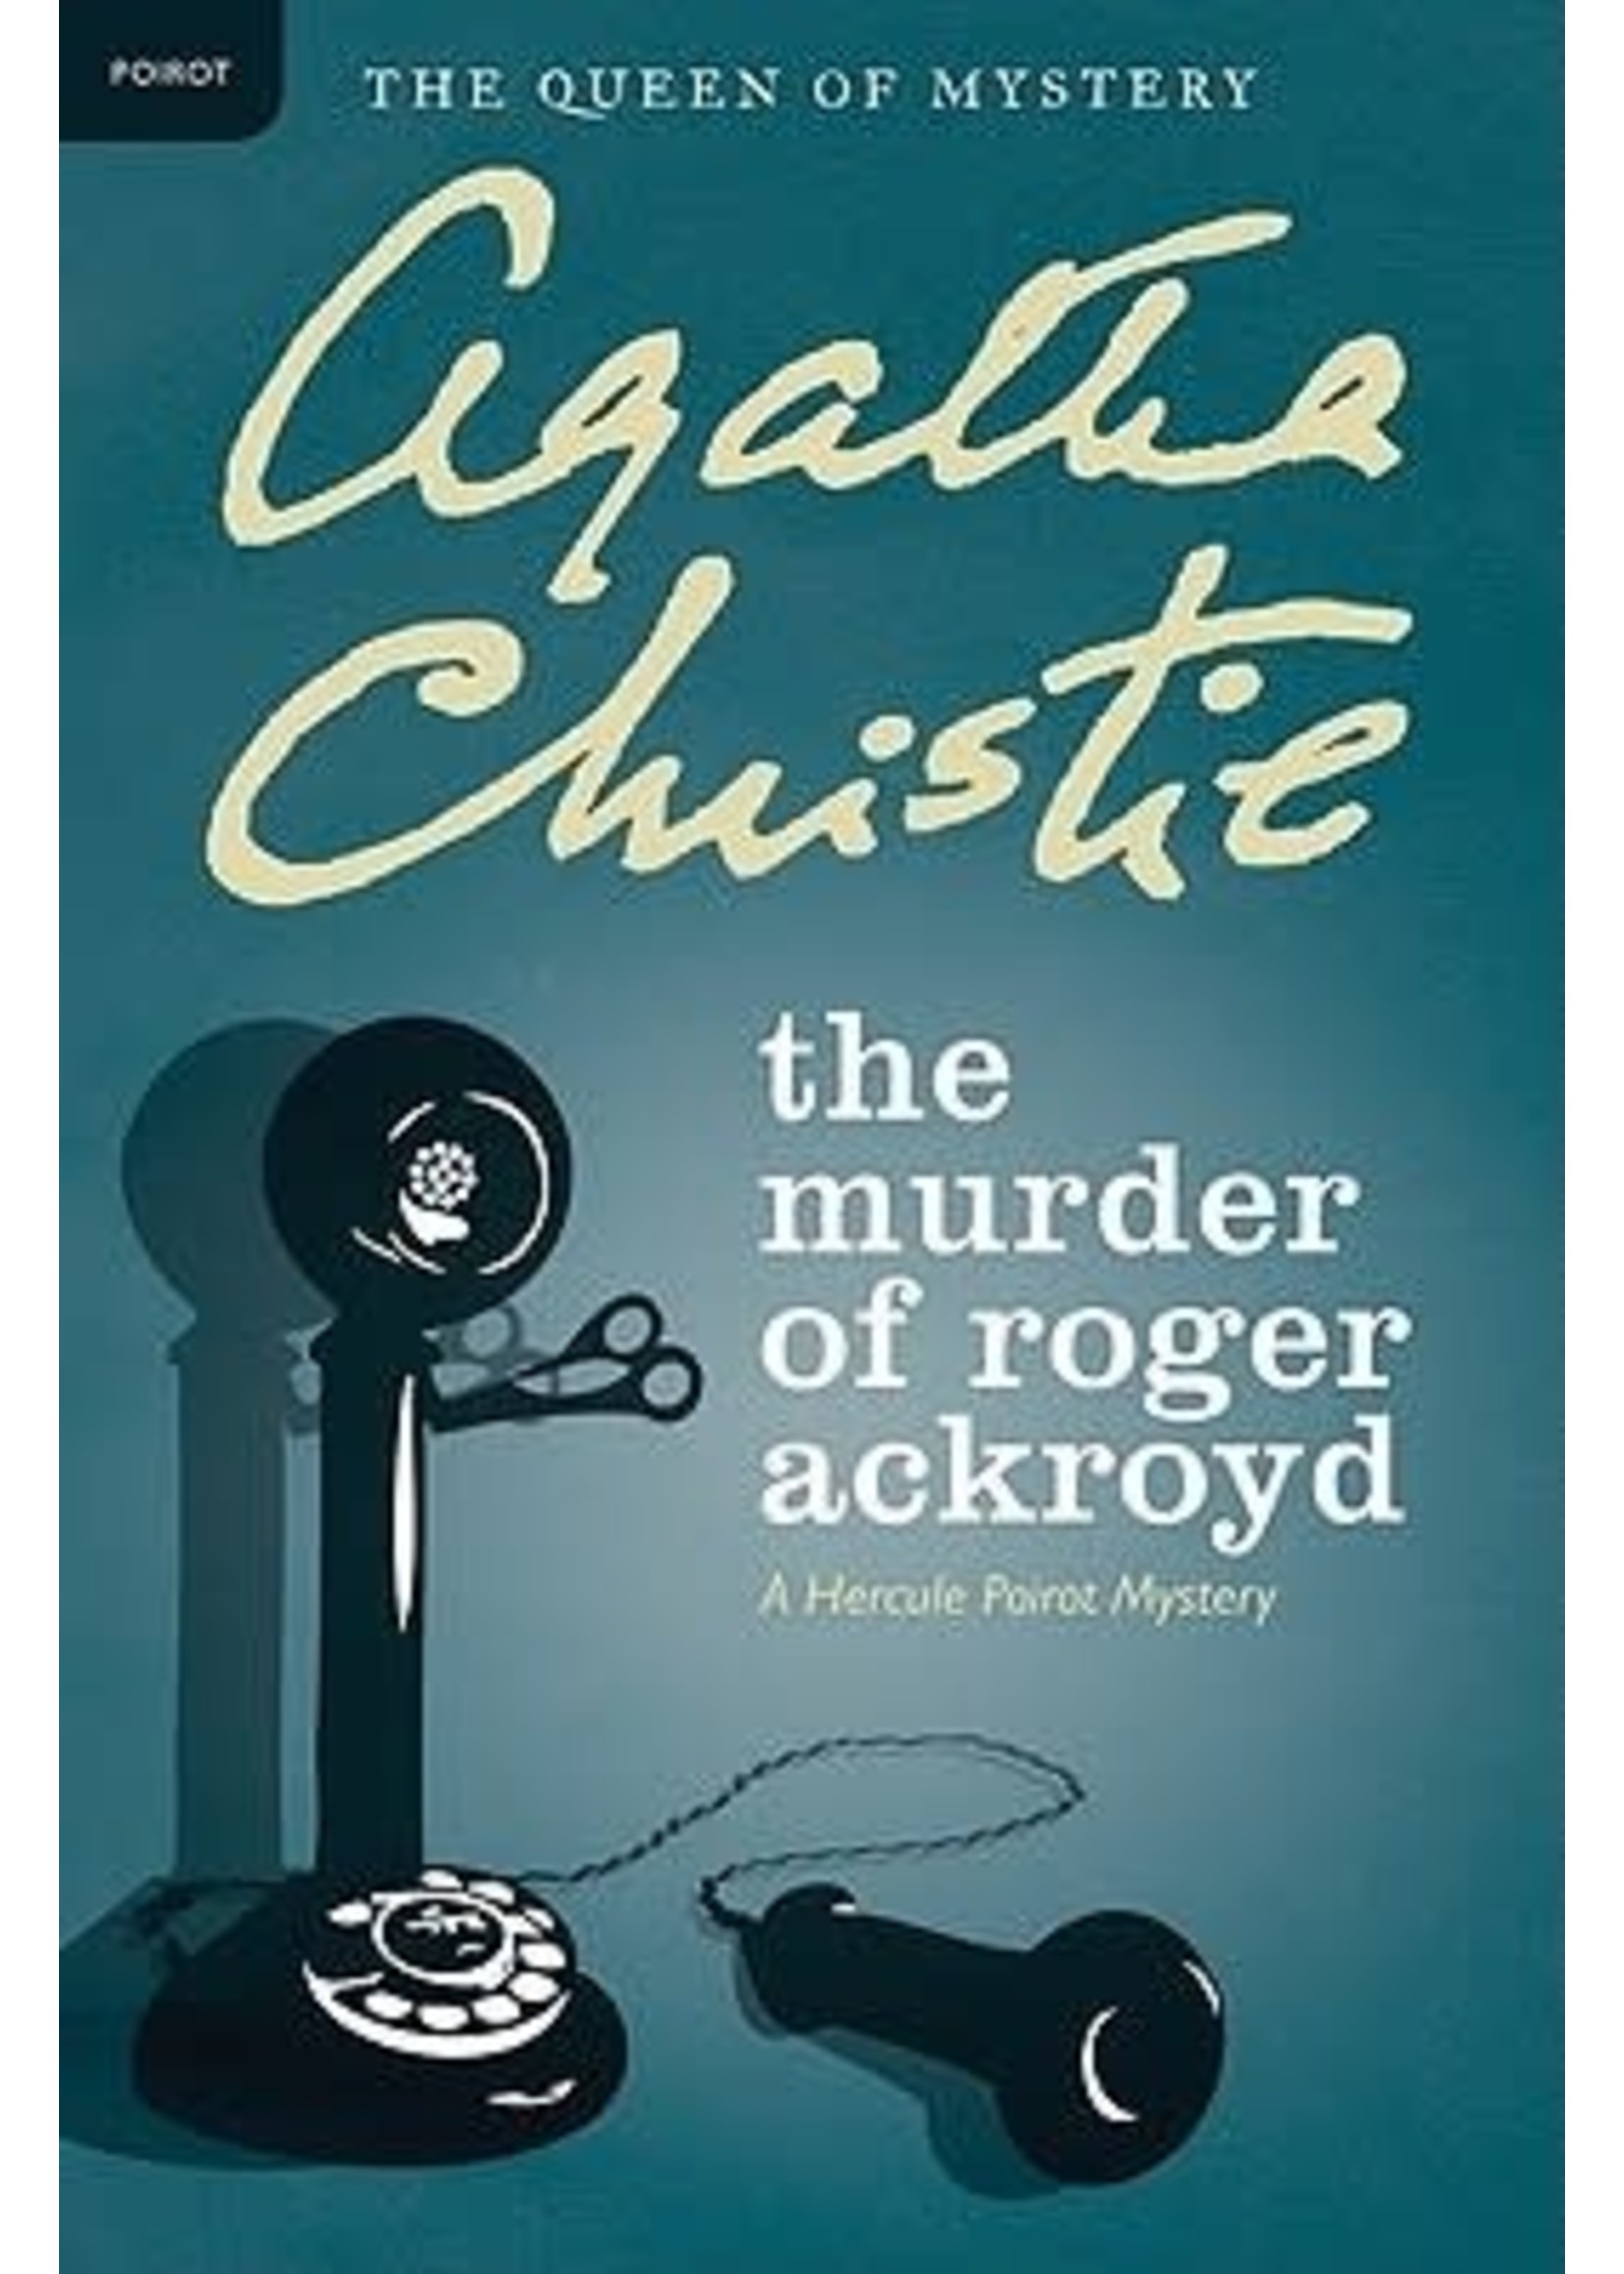 The Murder of Roger Ackroyd: A Hercule Poirot Mystery (Hercule Poirot #6) by Agatha Christie